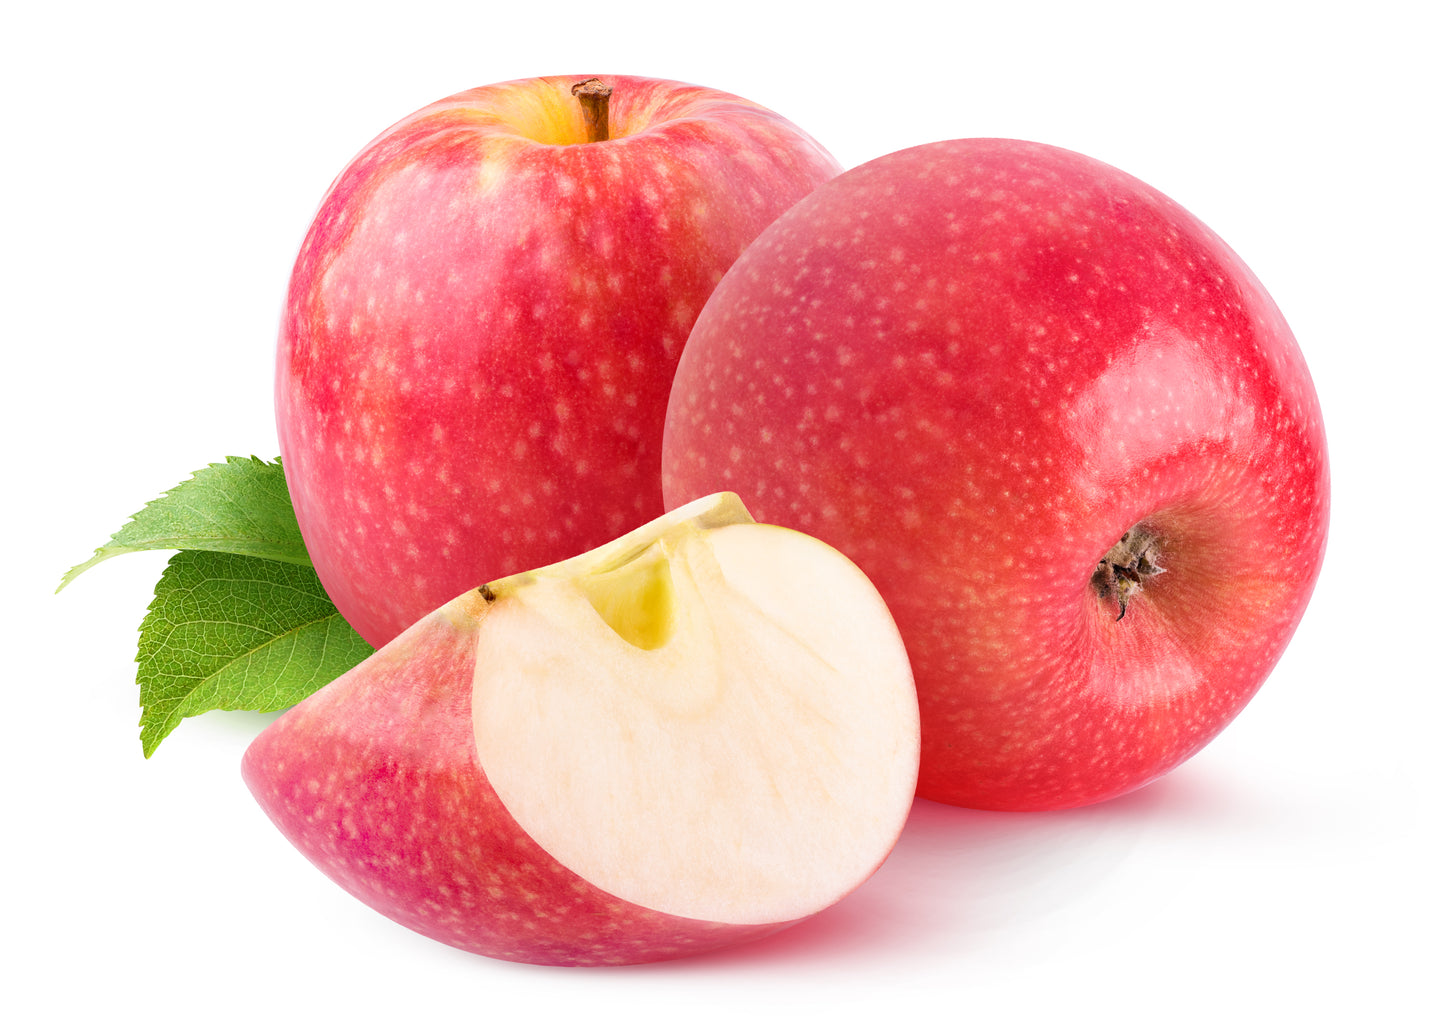 Apples - Pink Lady x4